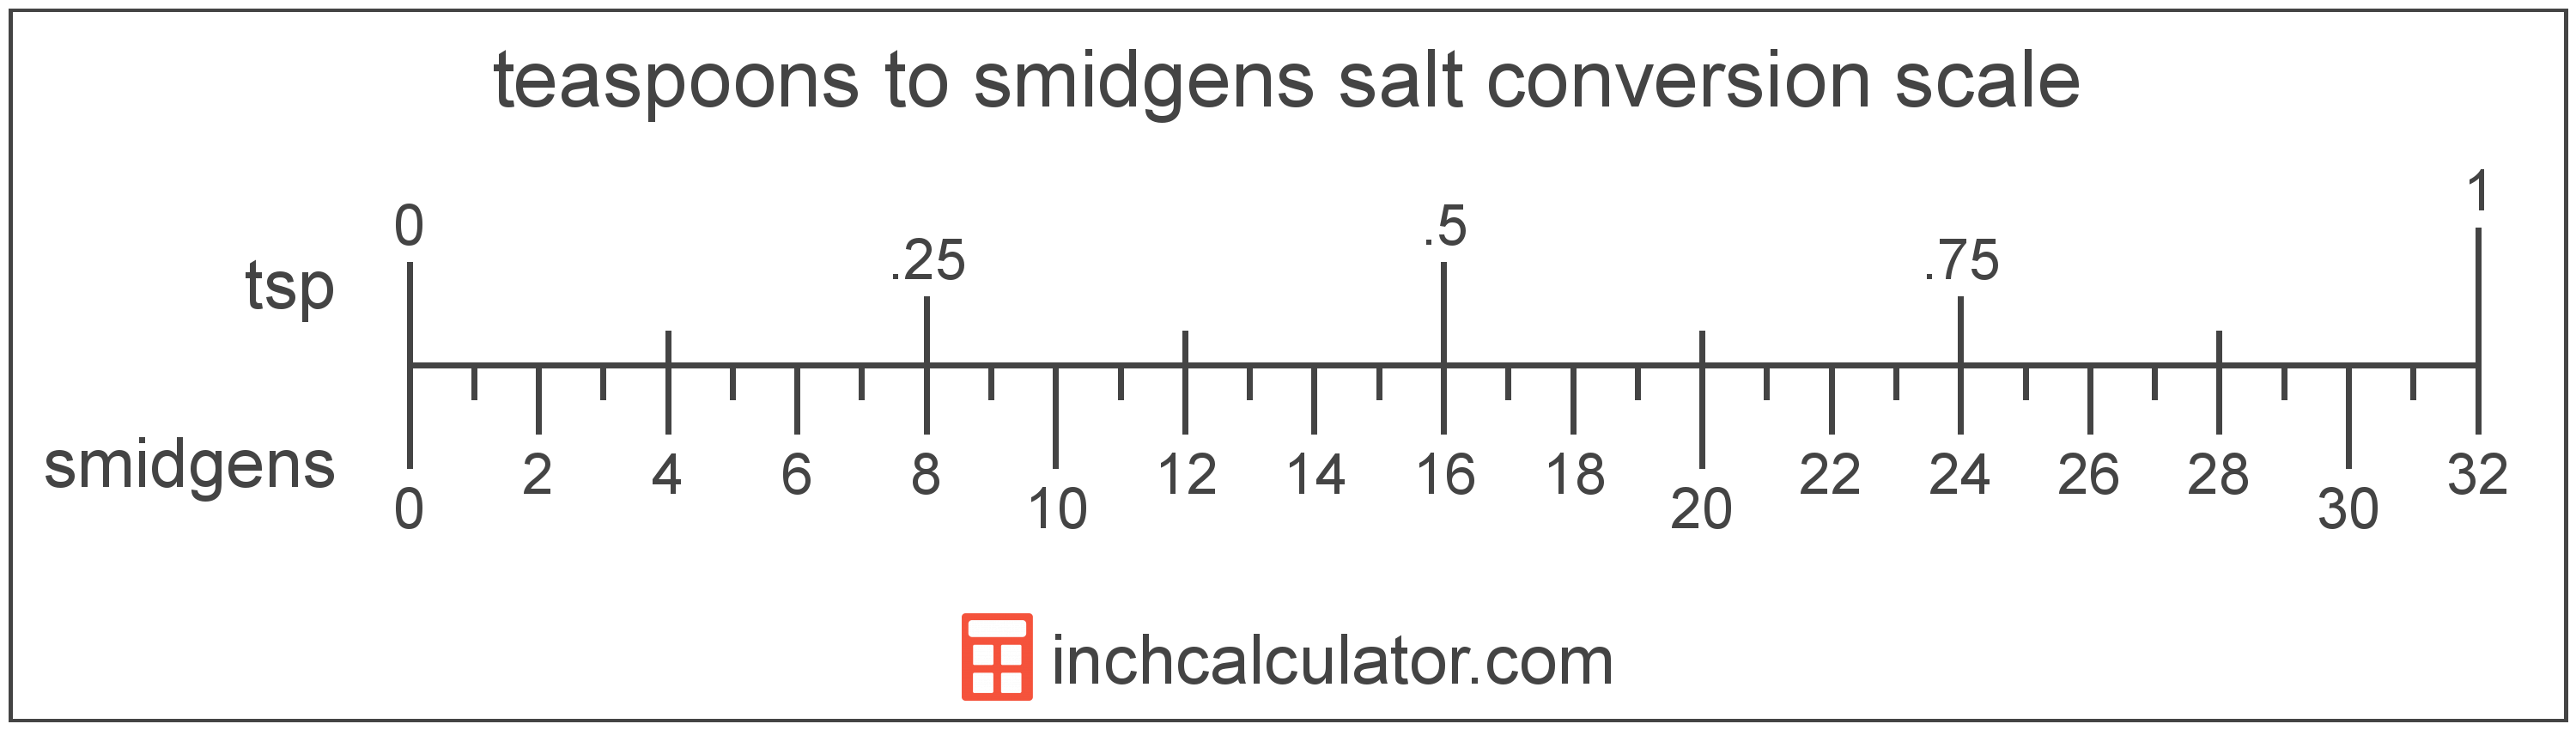 conversion scale showing smidgens and equivalent teaspoons salt volume values